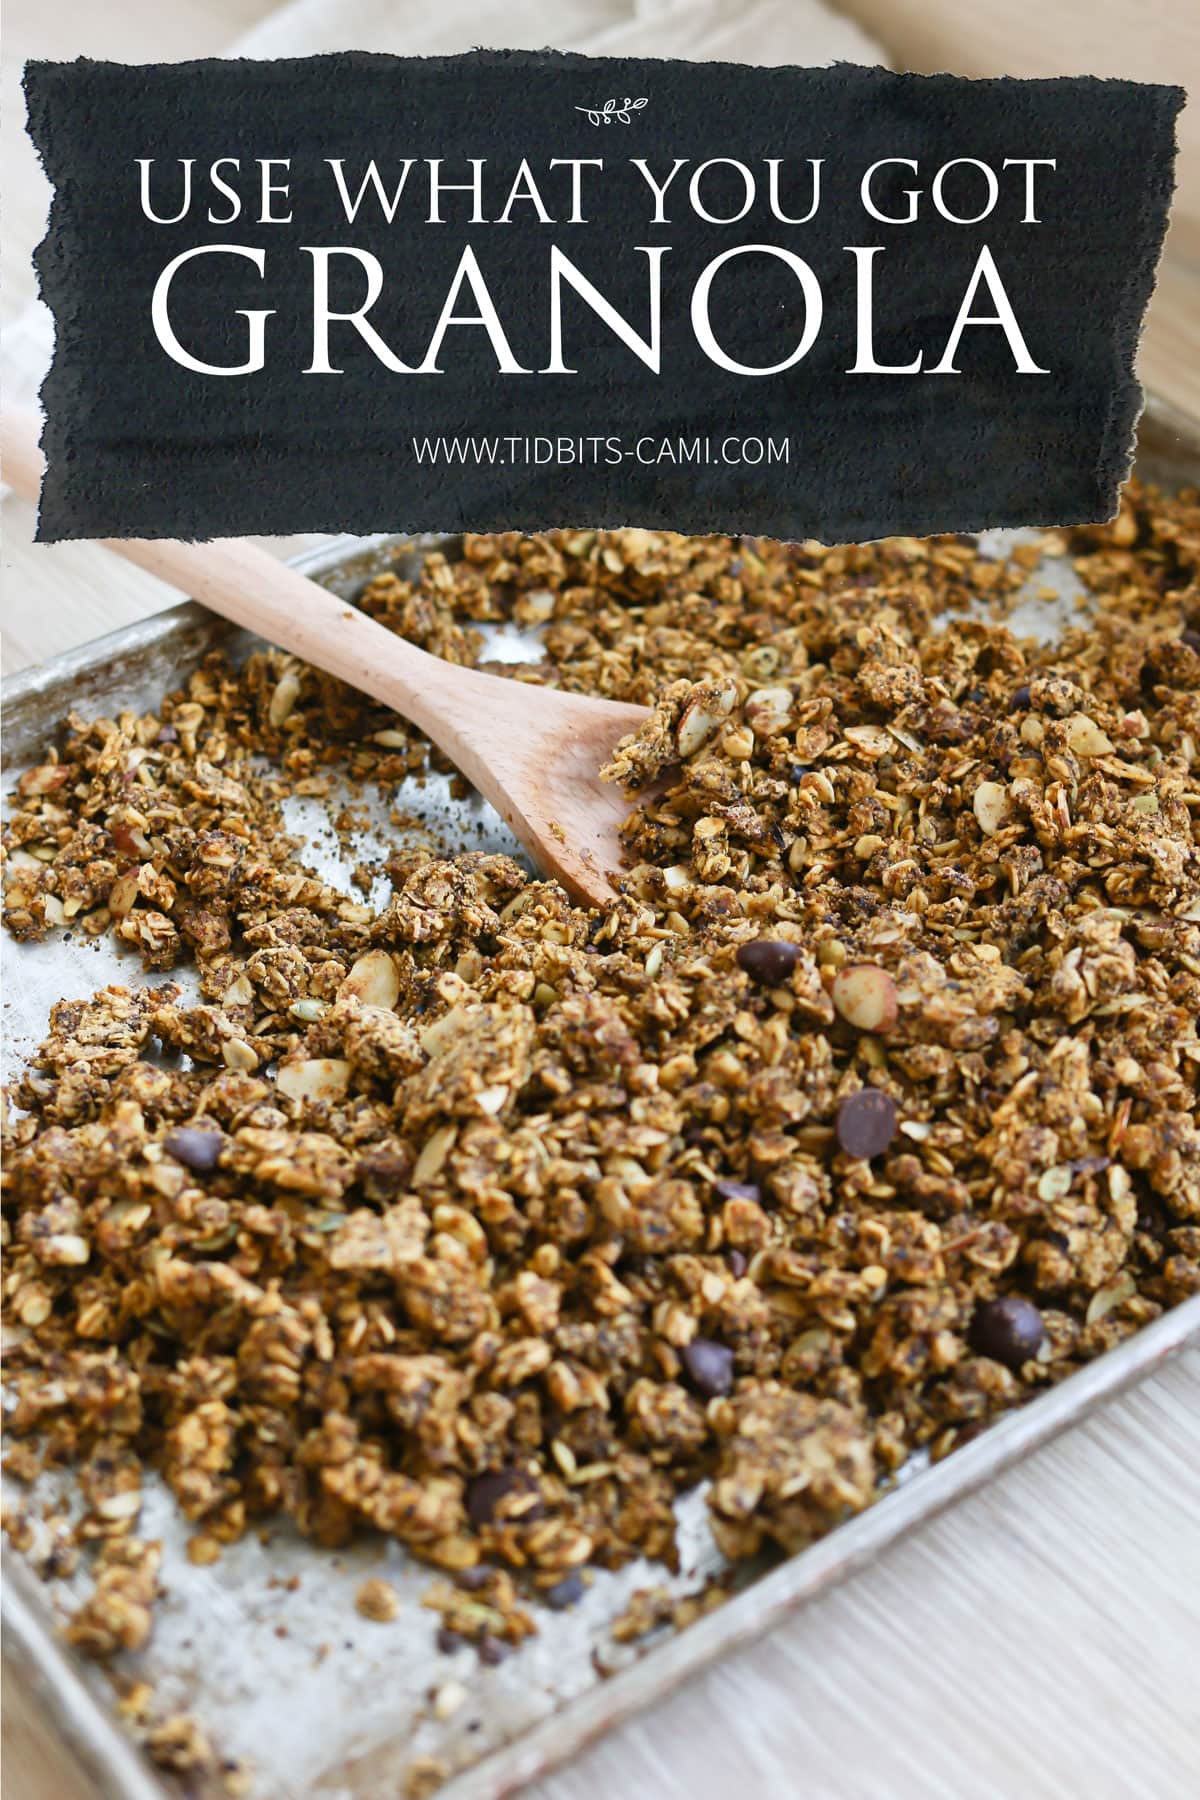 Use what you got granola recipe